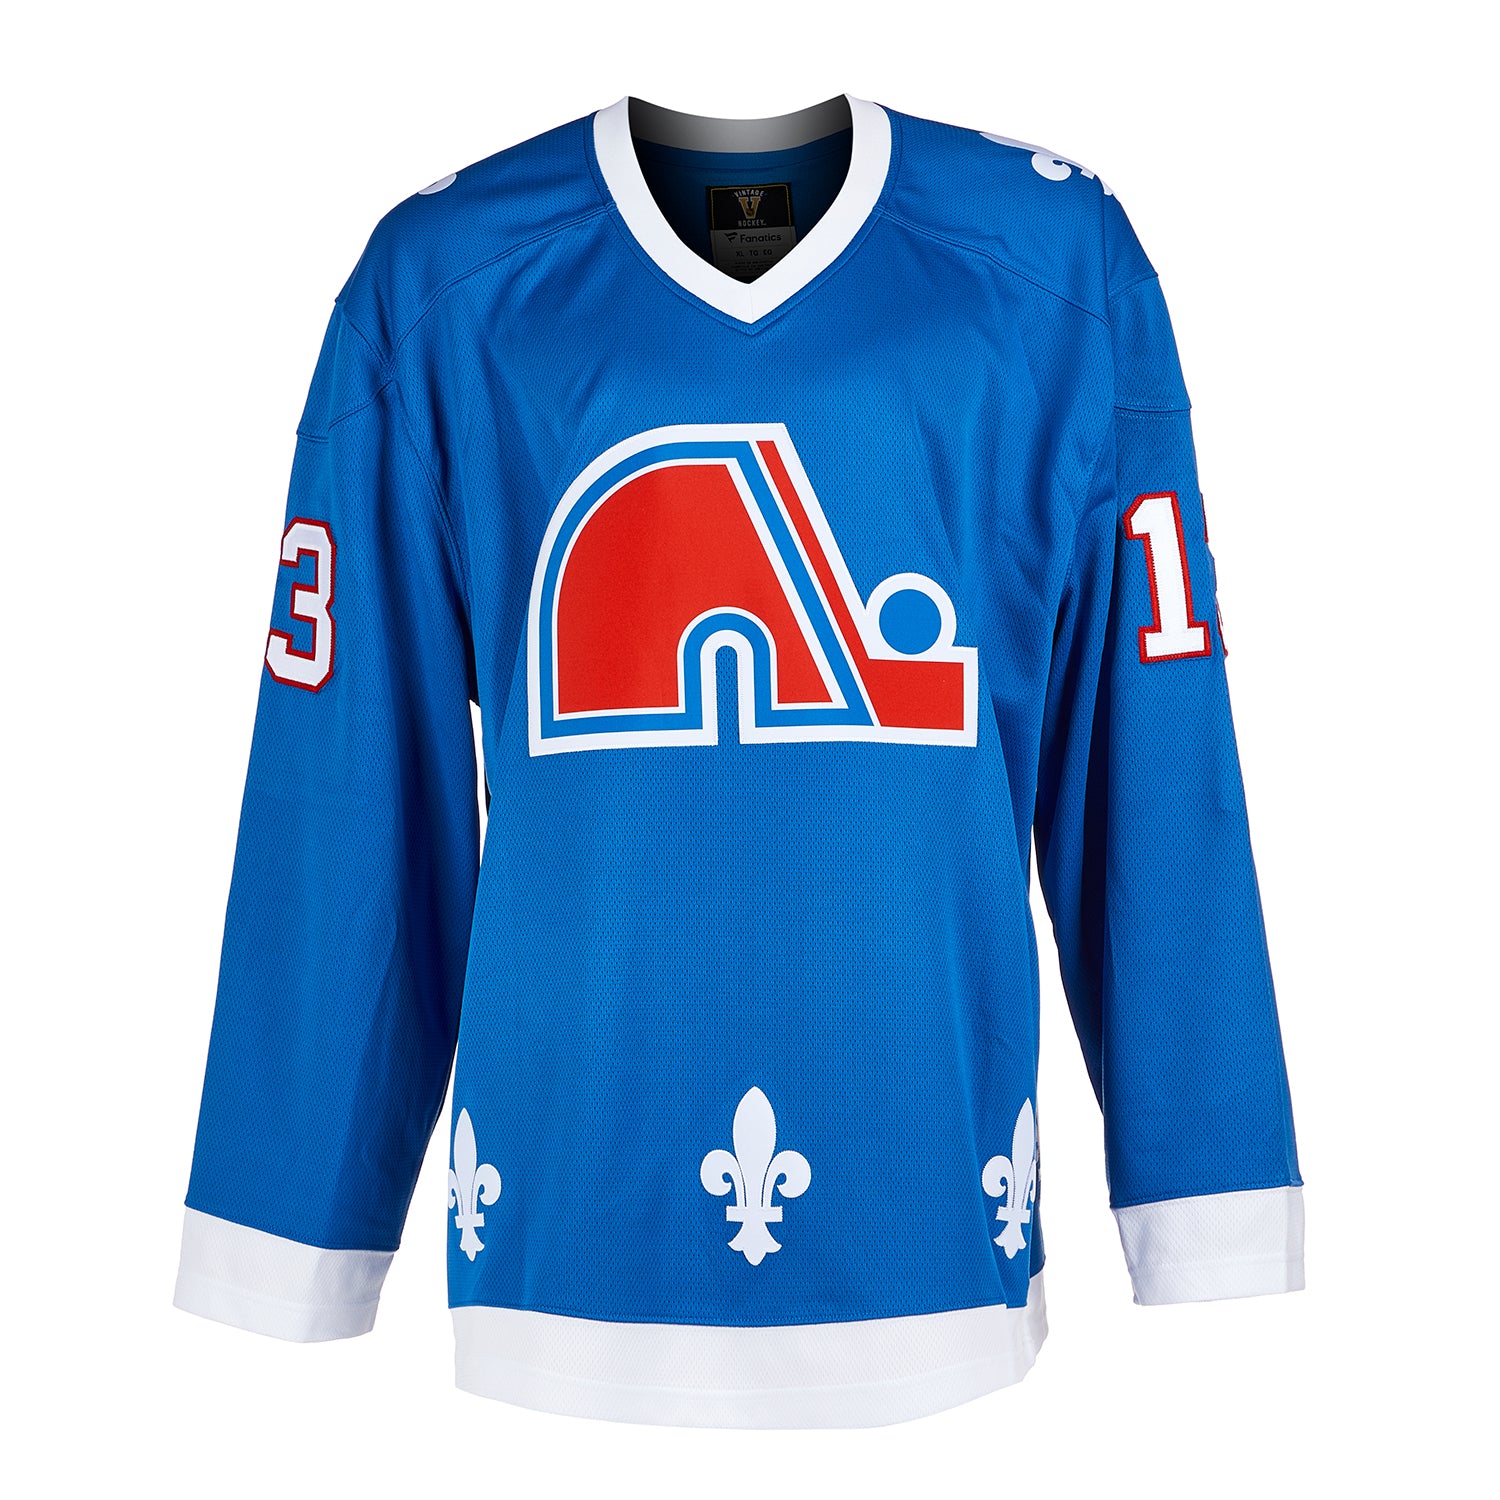 Mats Sundin Quebec Nordiques Autographed Fanatics Vintage Hockey Jersey